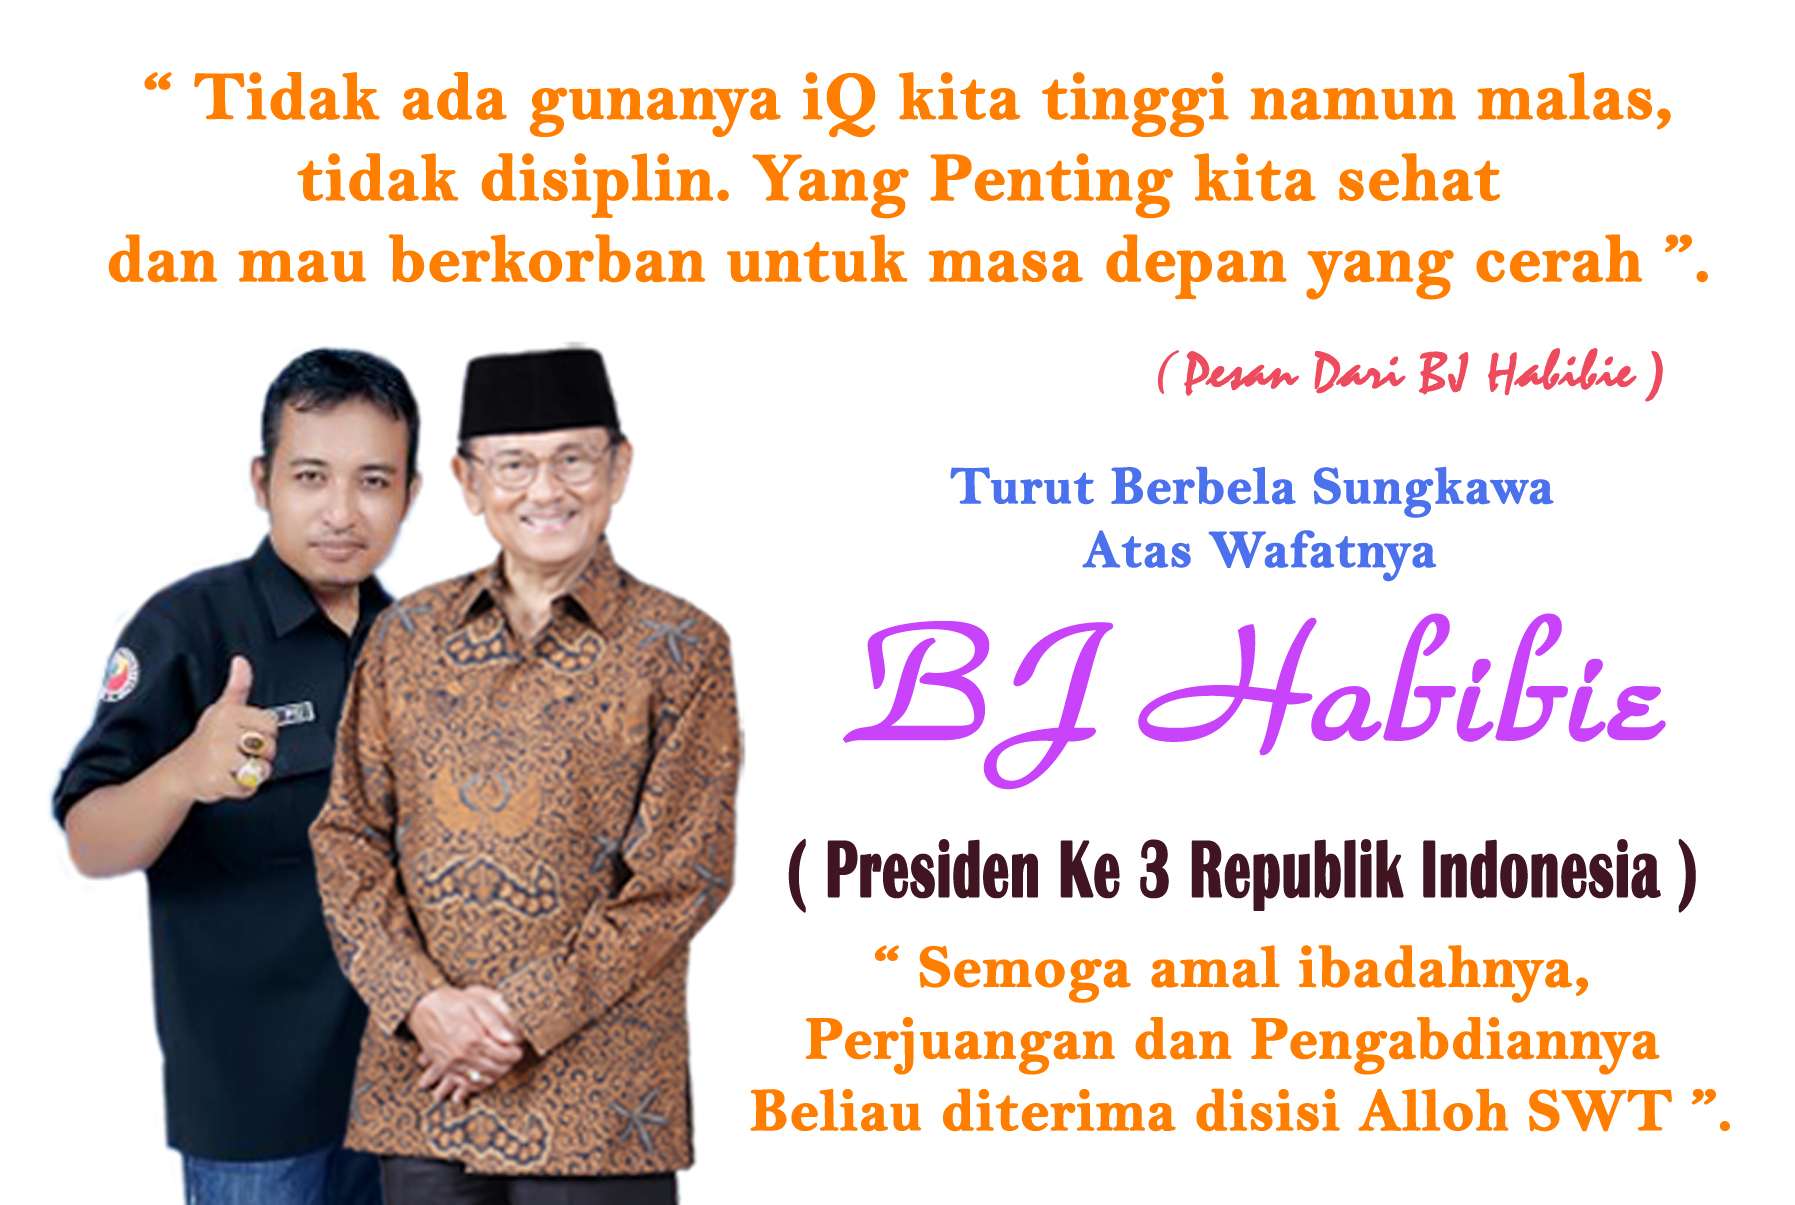 Selamat Jalan Presiden Ke 3 Republik indonesia